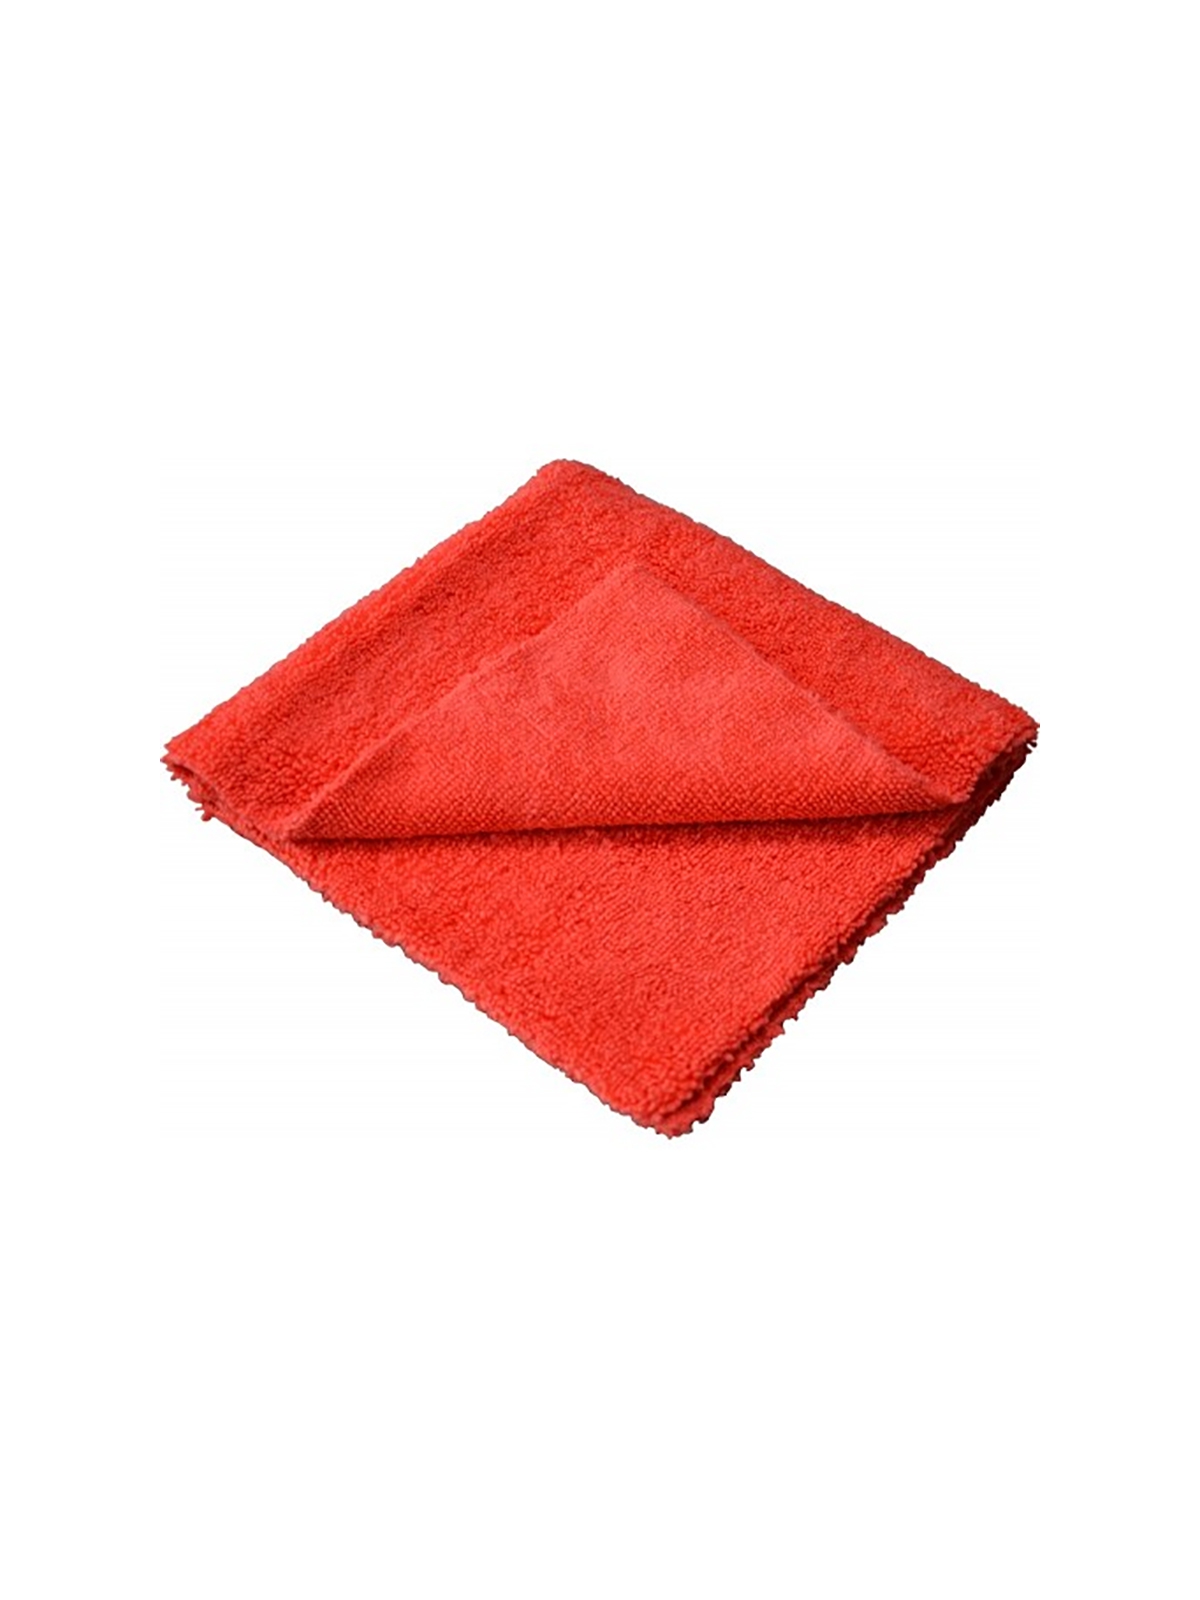 ROTWEISS - Micro Fiber Cloth for Polish - red, 40x40 cm